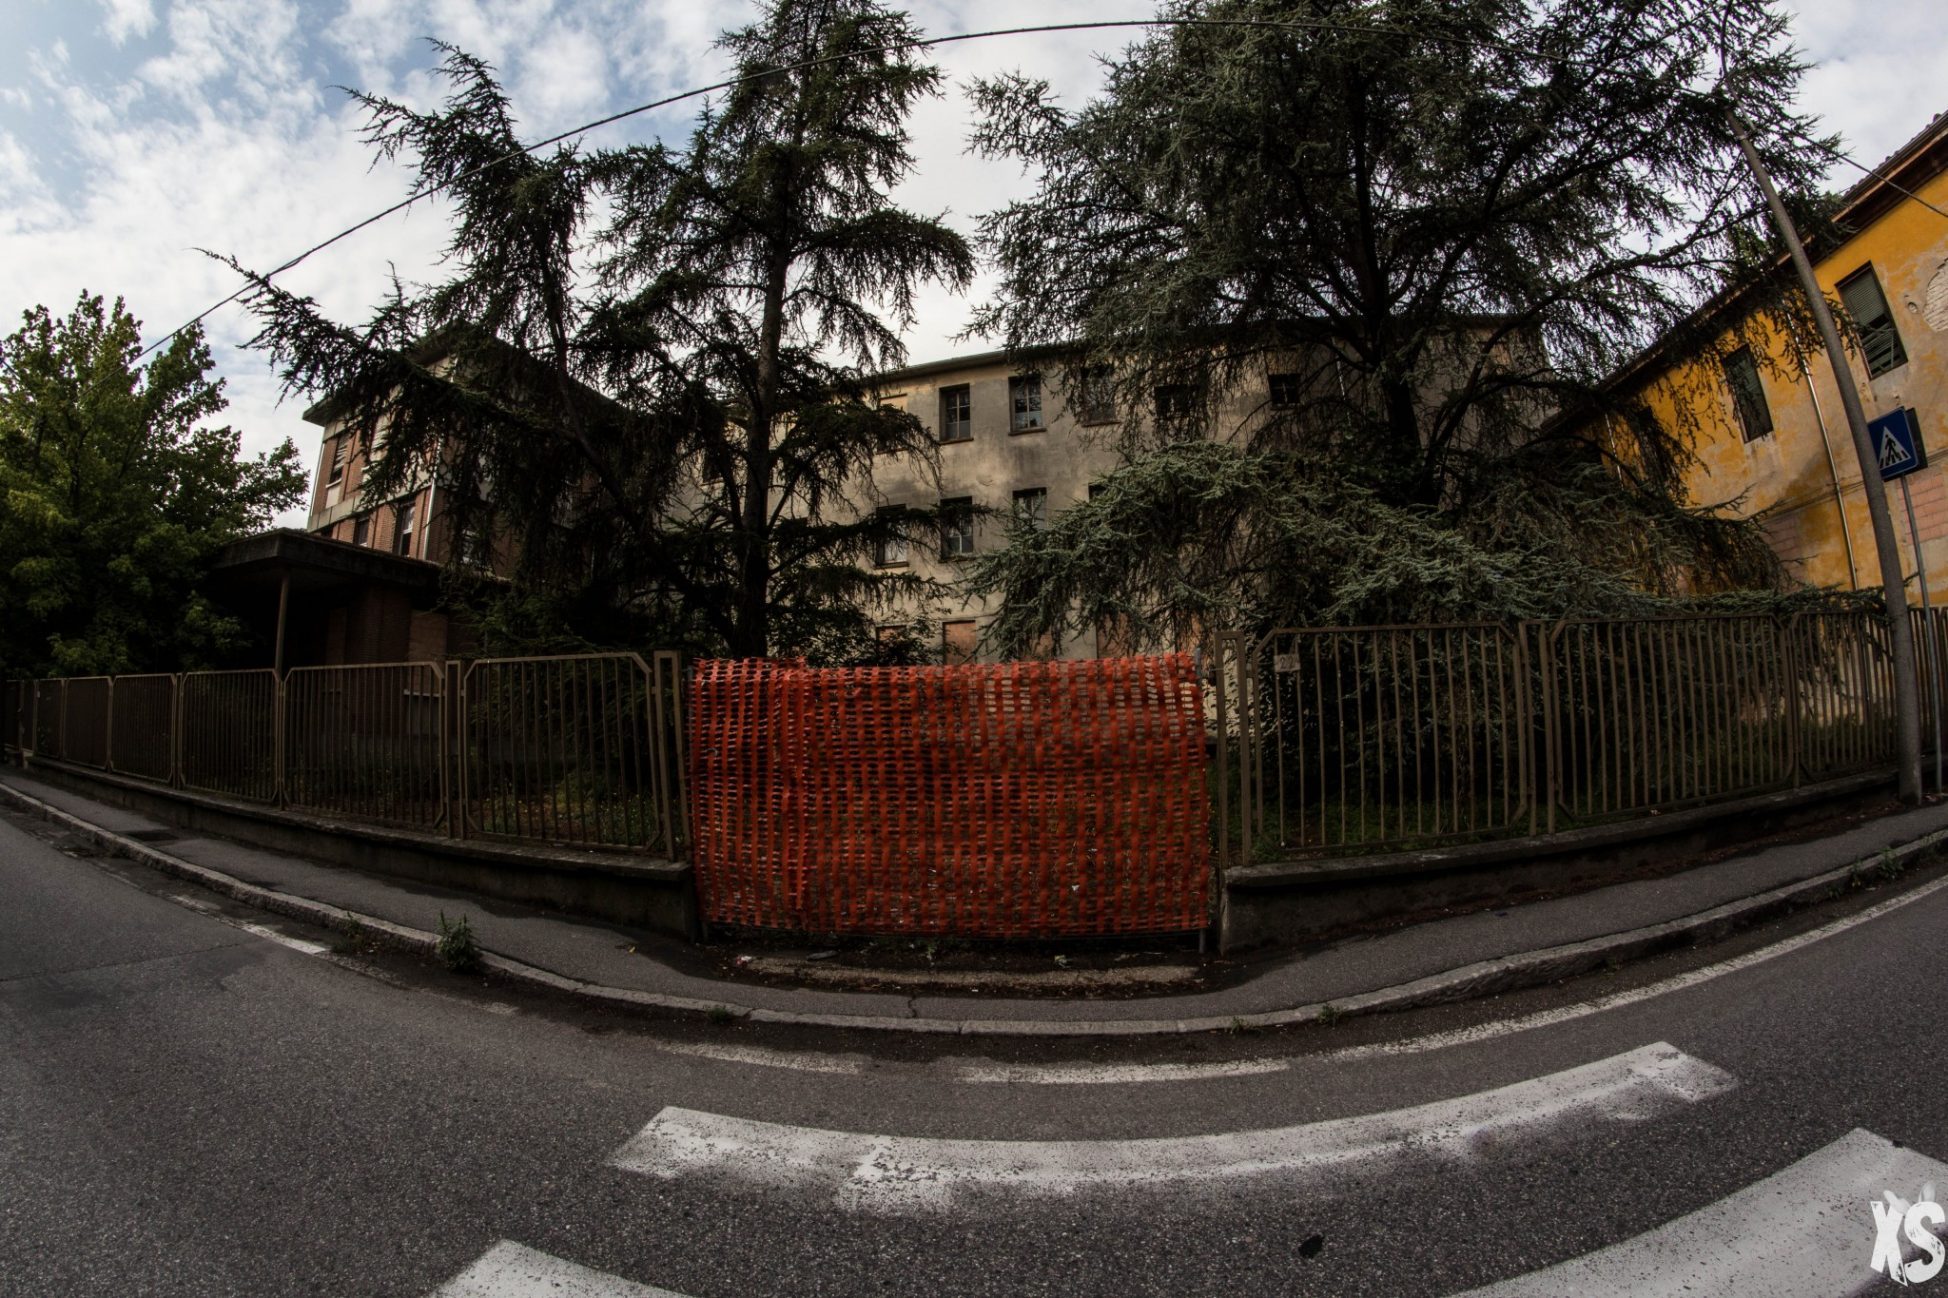 Asile abandonné en Italie